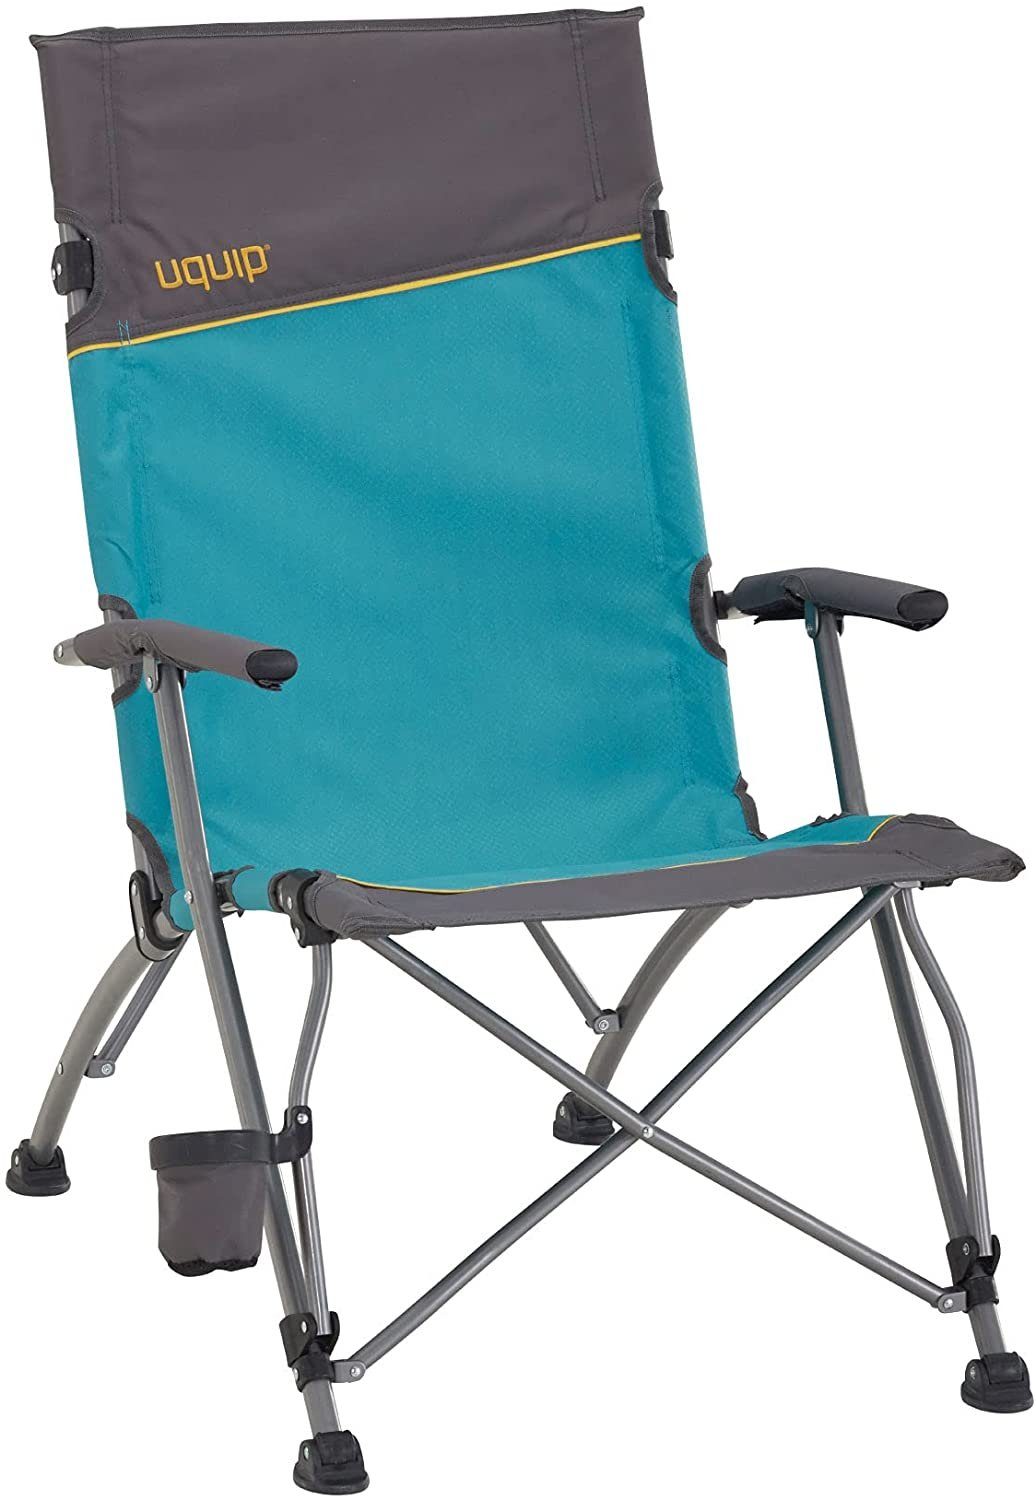 UQUIP Campingstuhl Sidney Campingstuhl - Lounge-Charakter, bis 120 kg Traglast, gepolsterte Armlehnen, hohe Lehne, breite Standfüße